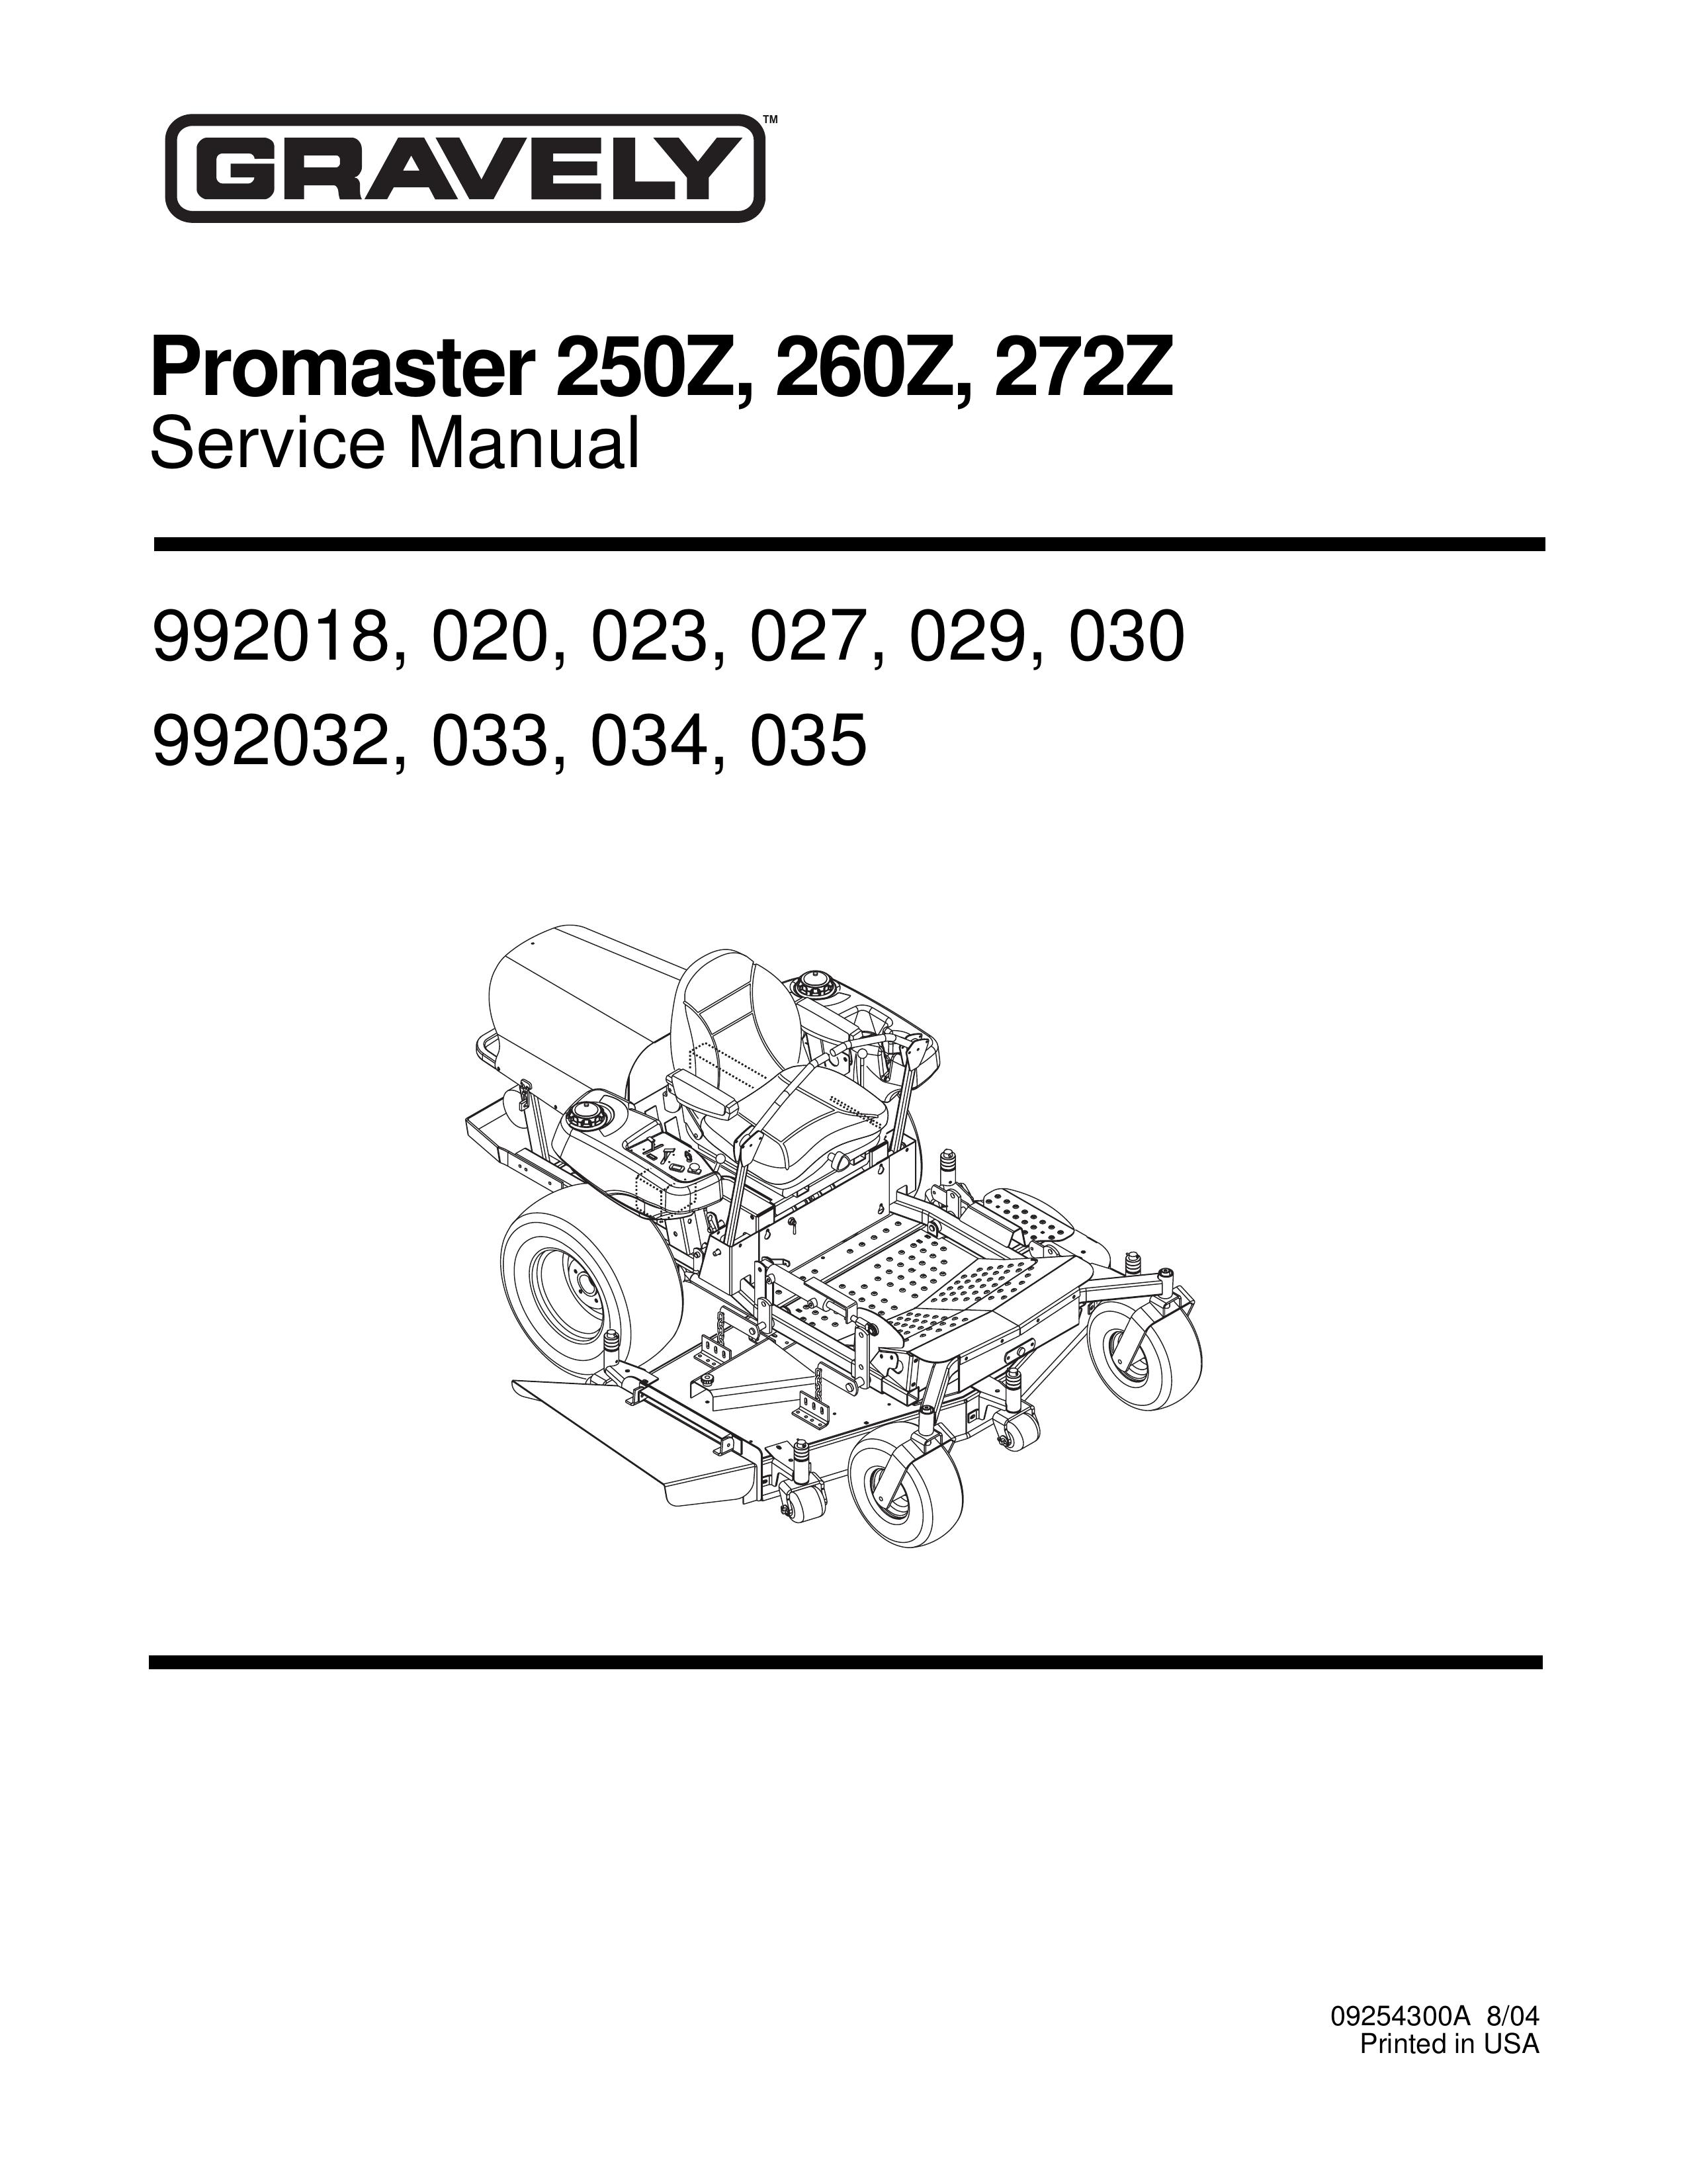 Gravely 260Z Lawn Mower User Manual